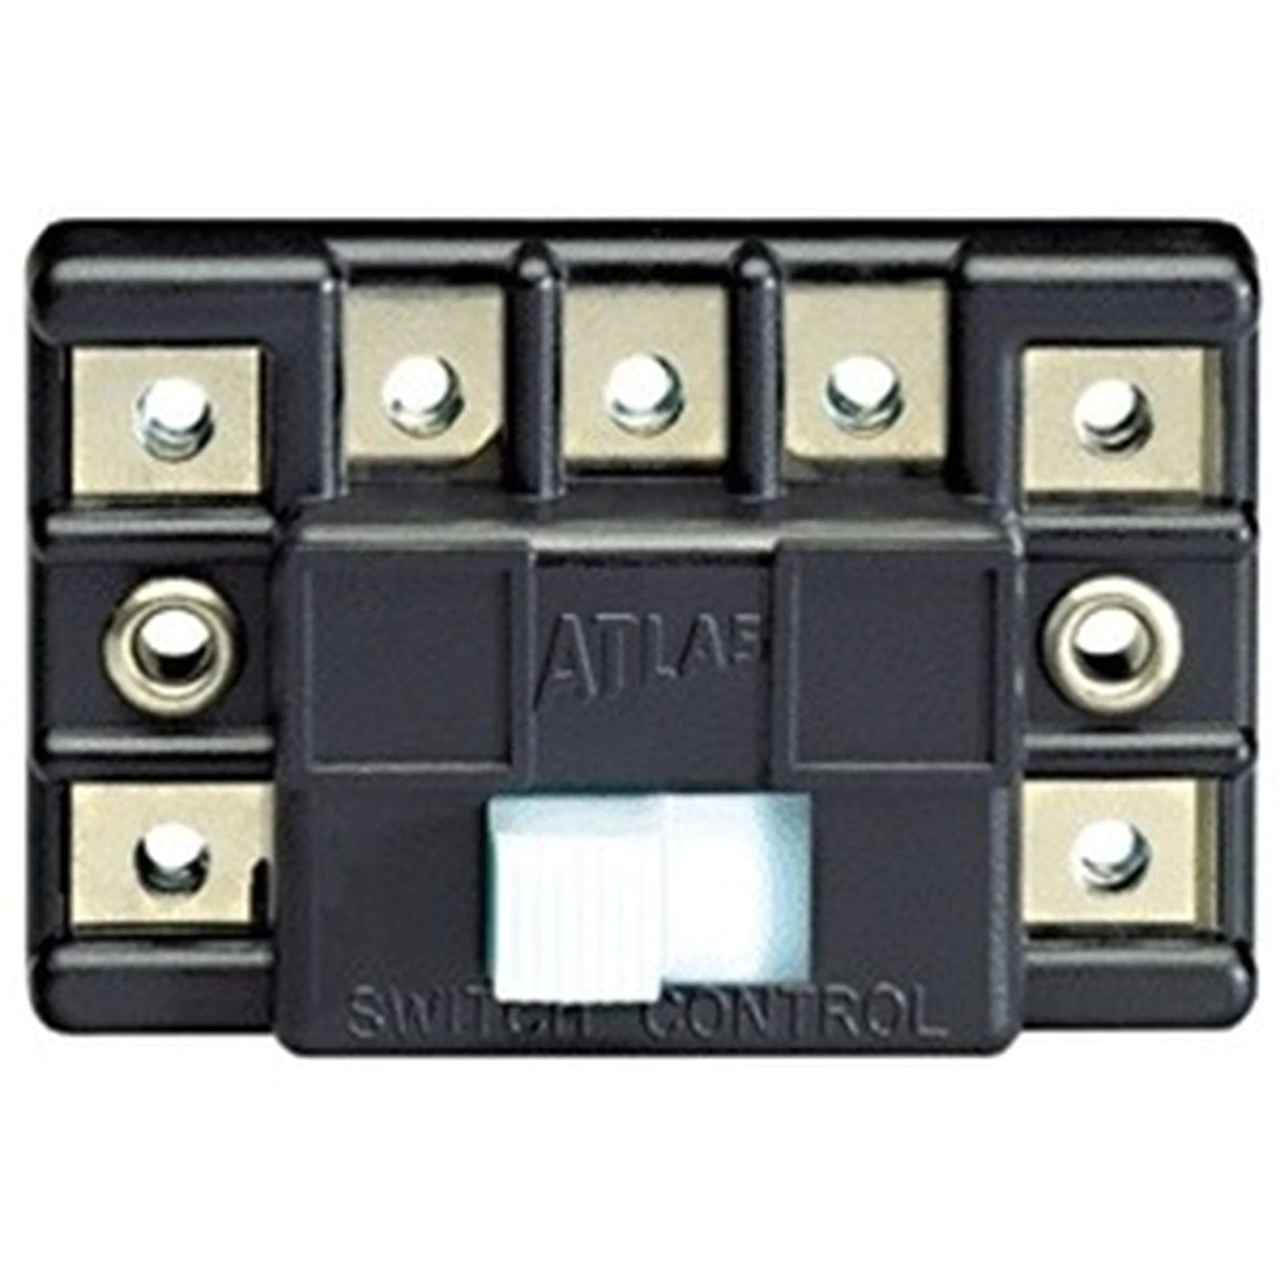 Atlas #56 Switch Control Box - Click Image to Close